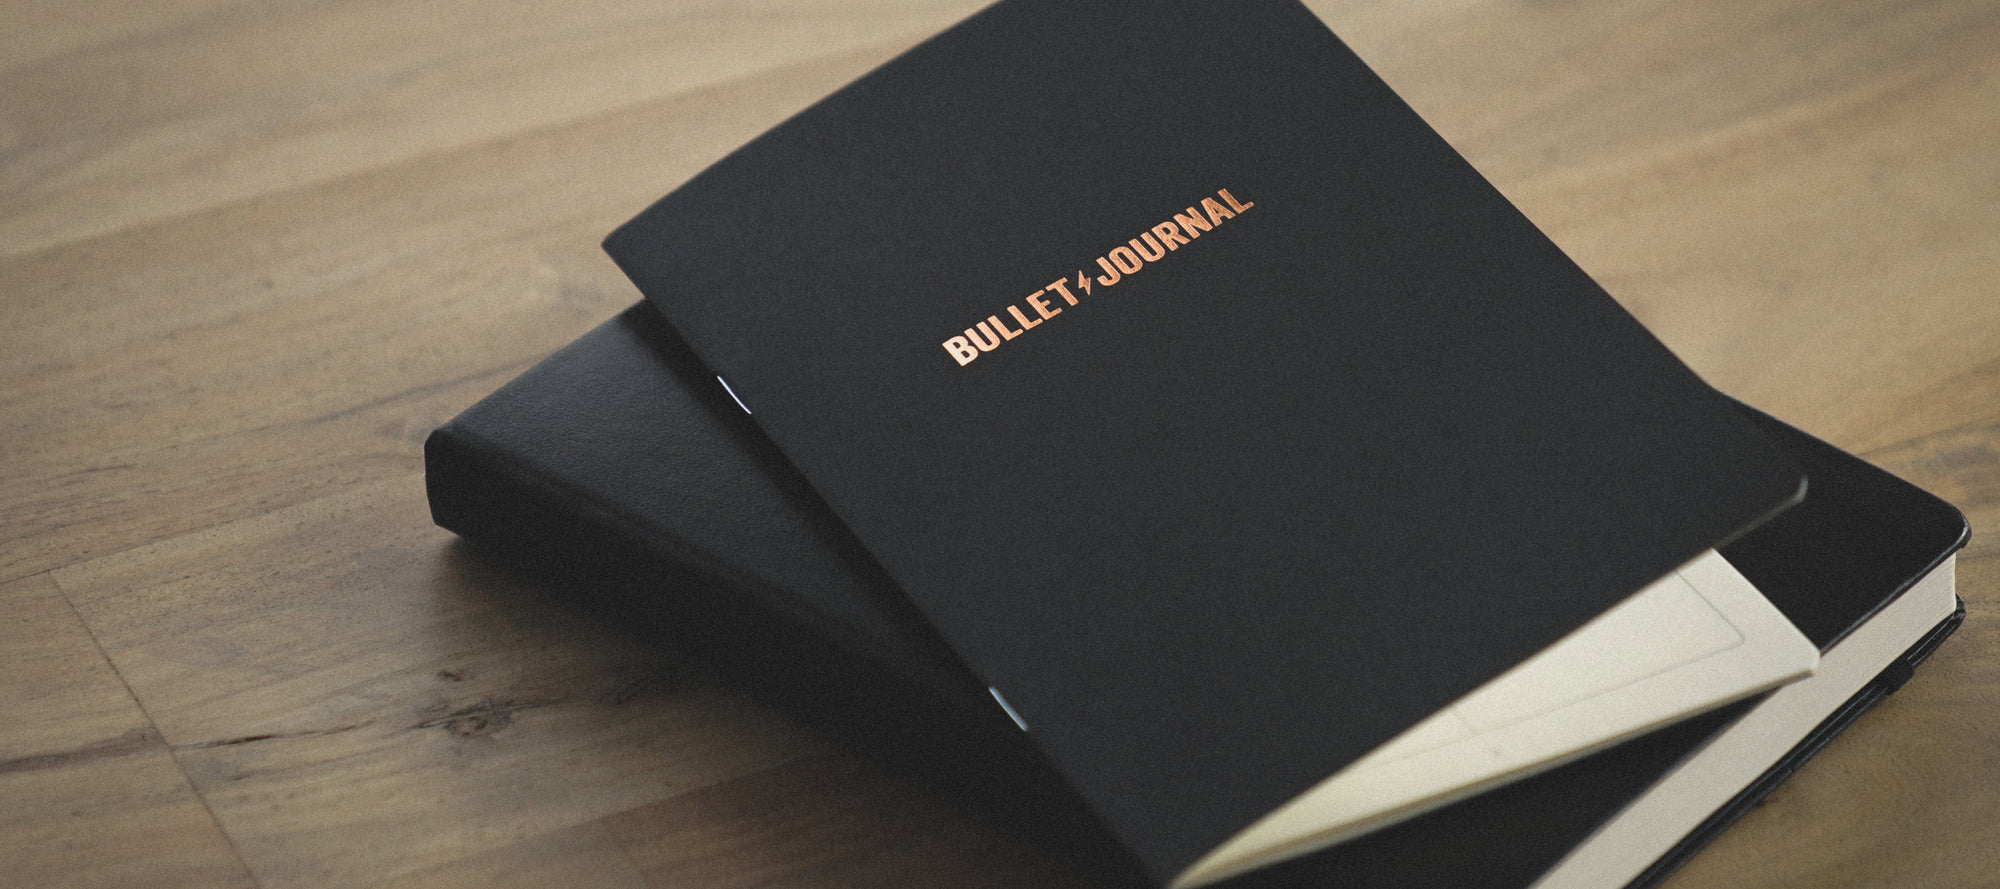 The Notebook - Bullet Journal